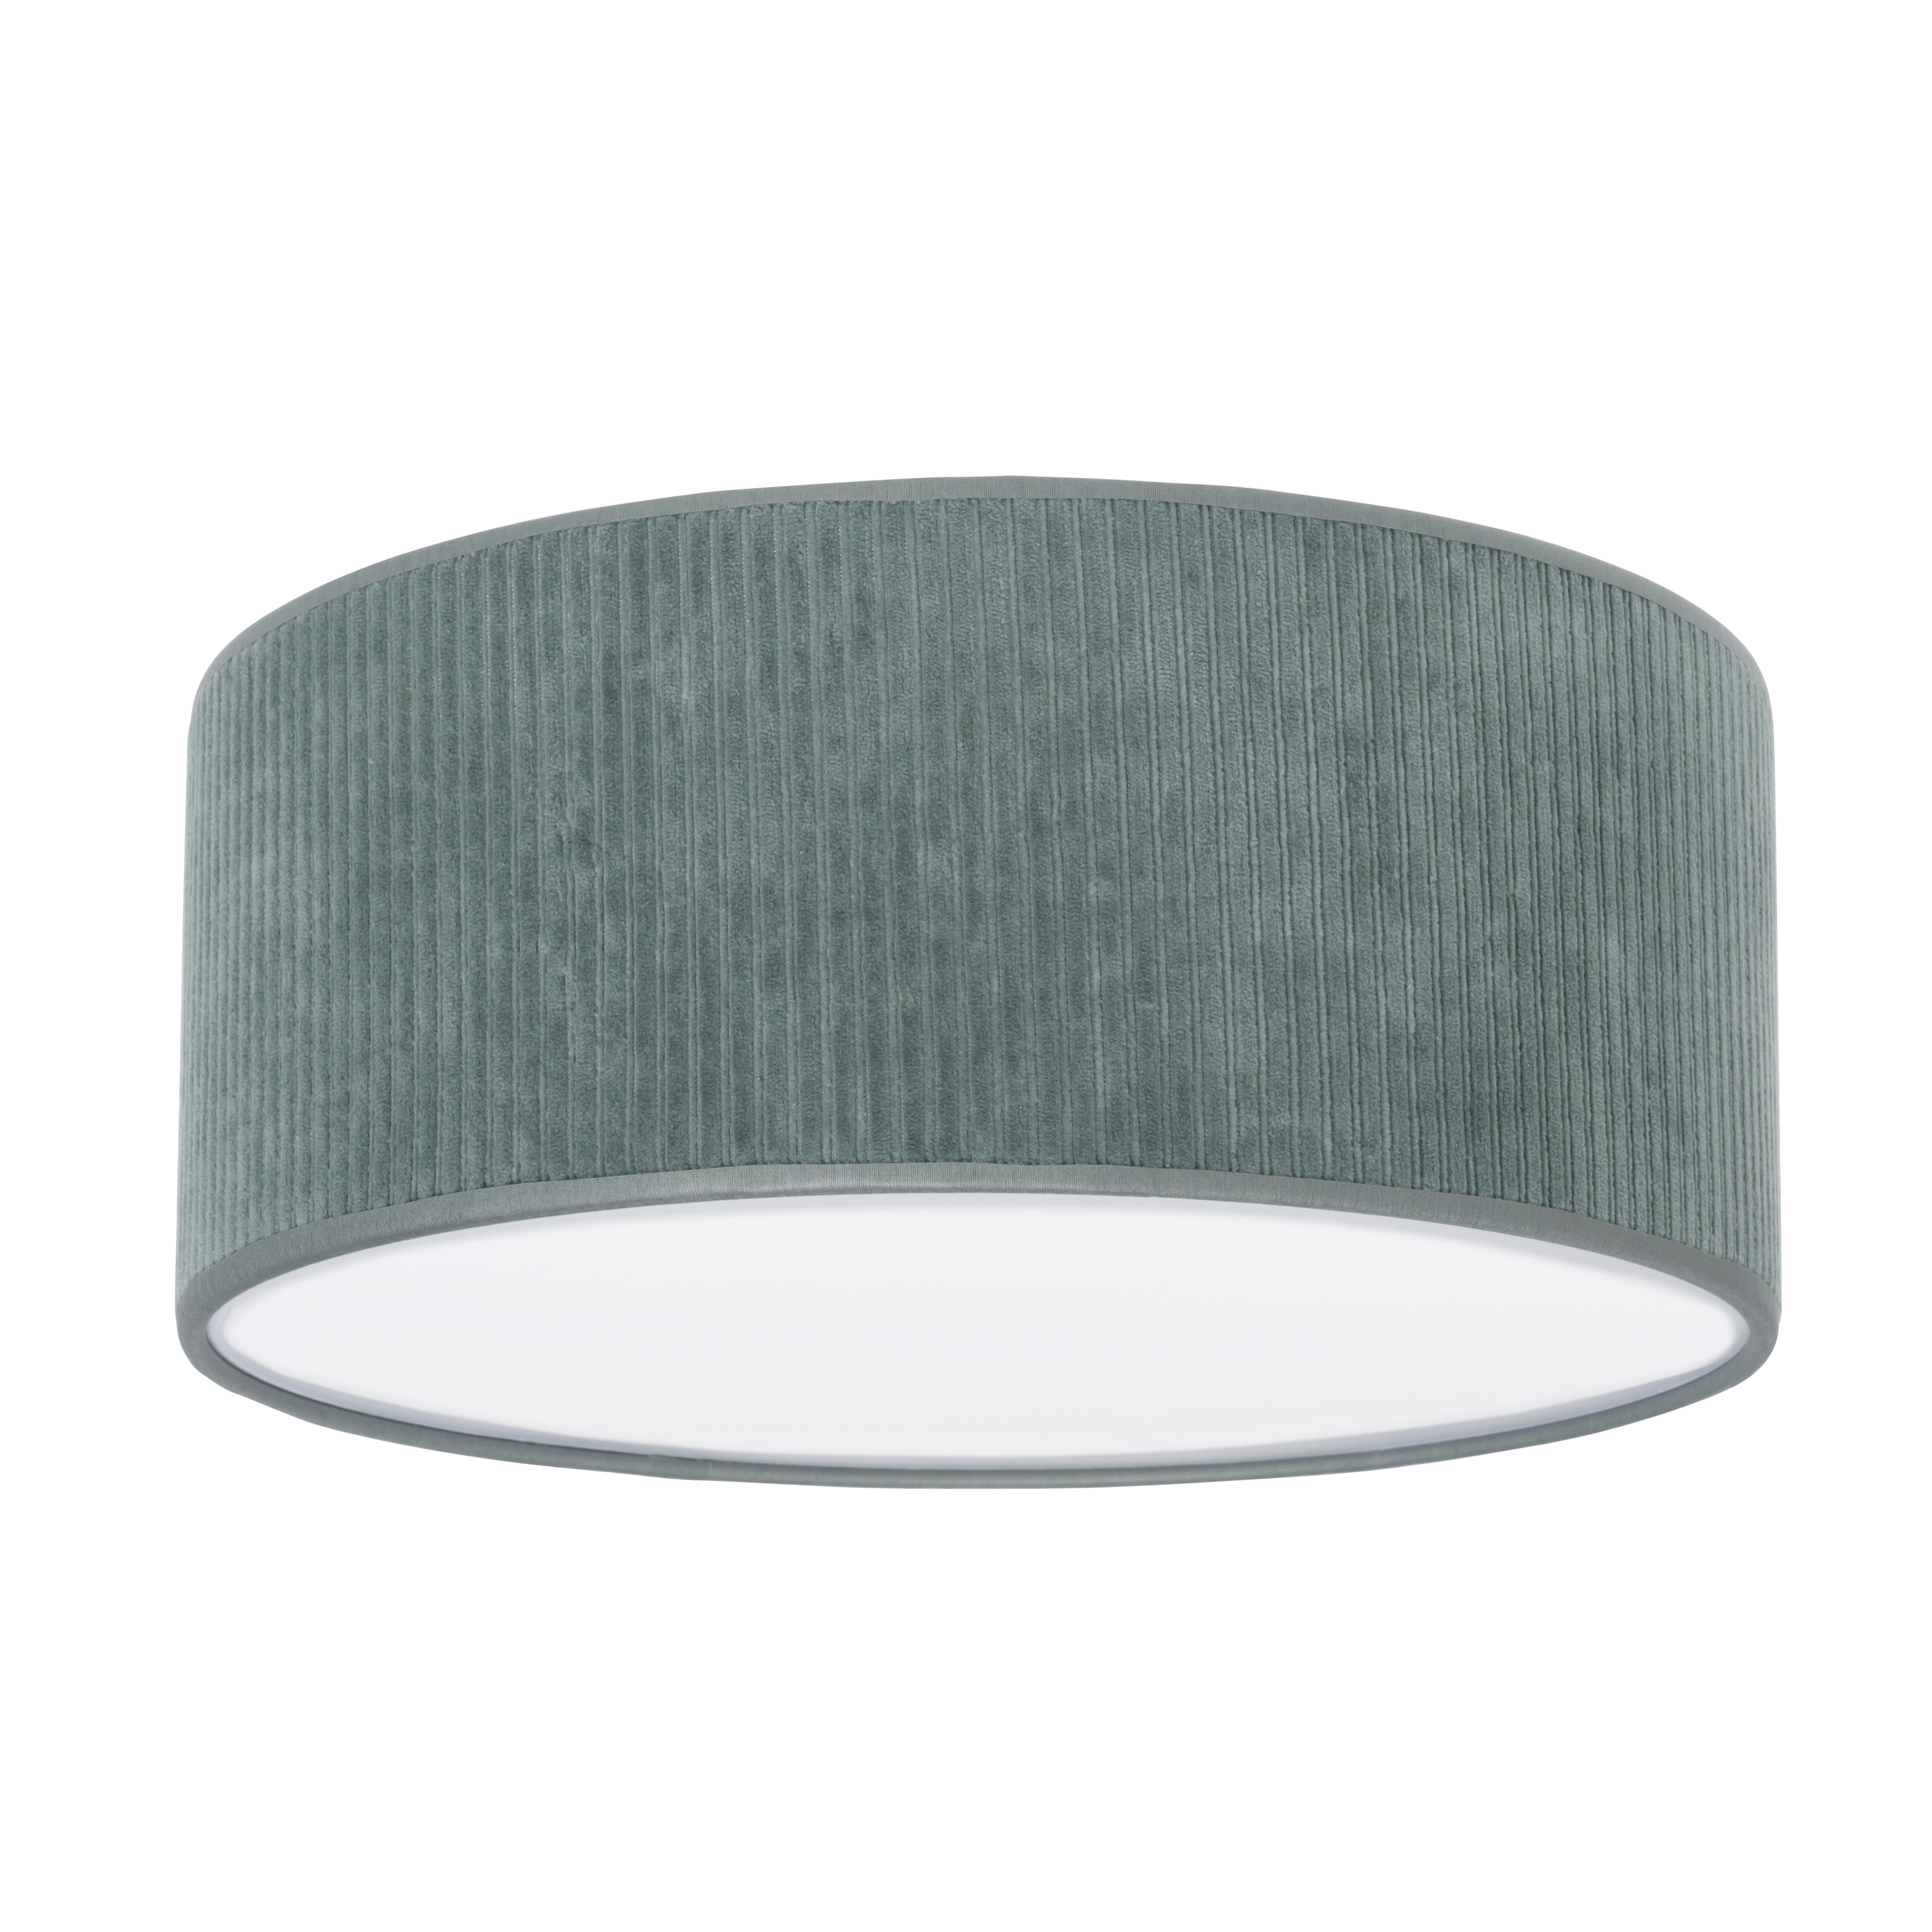 Ceiling lamp Sense sea green - Ø35 cm